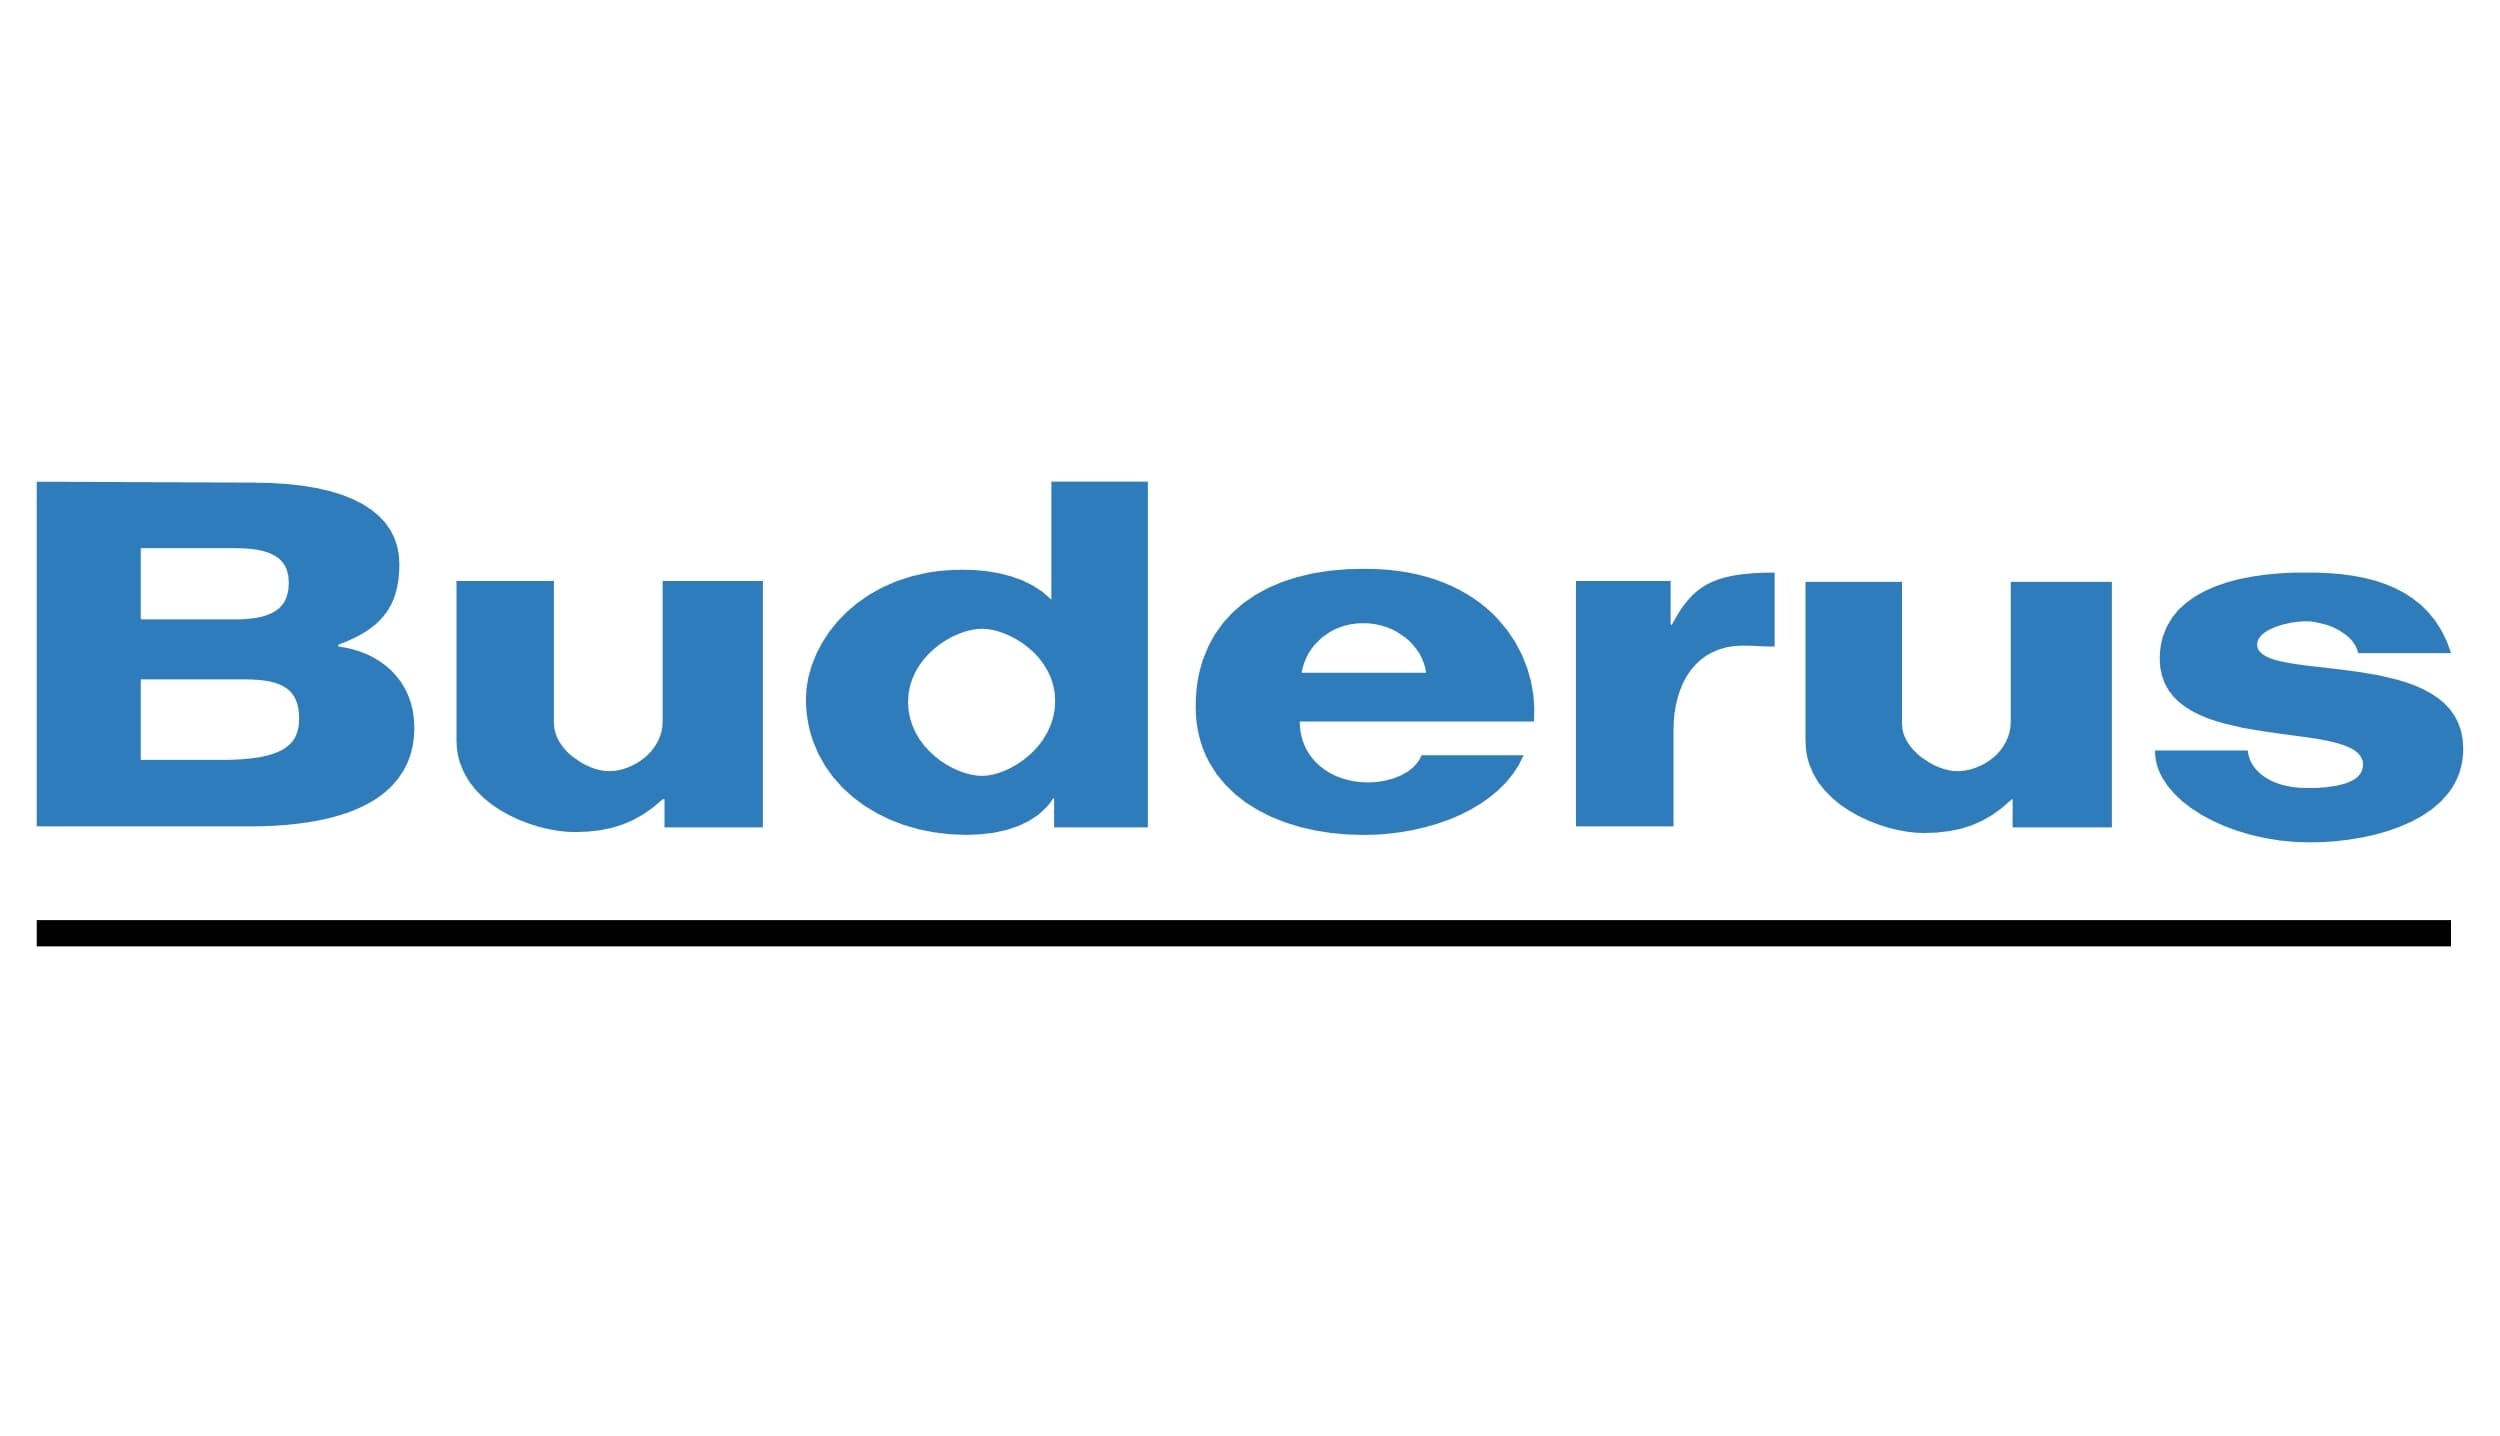 https://1000logos.net/wp-content/uploads/2020/05/Buderus-logo.jpg